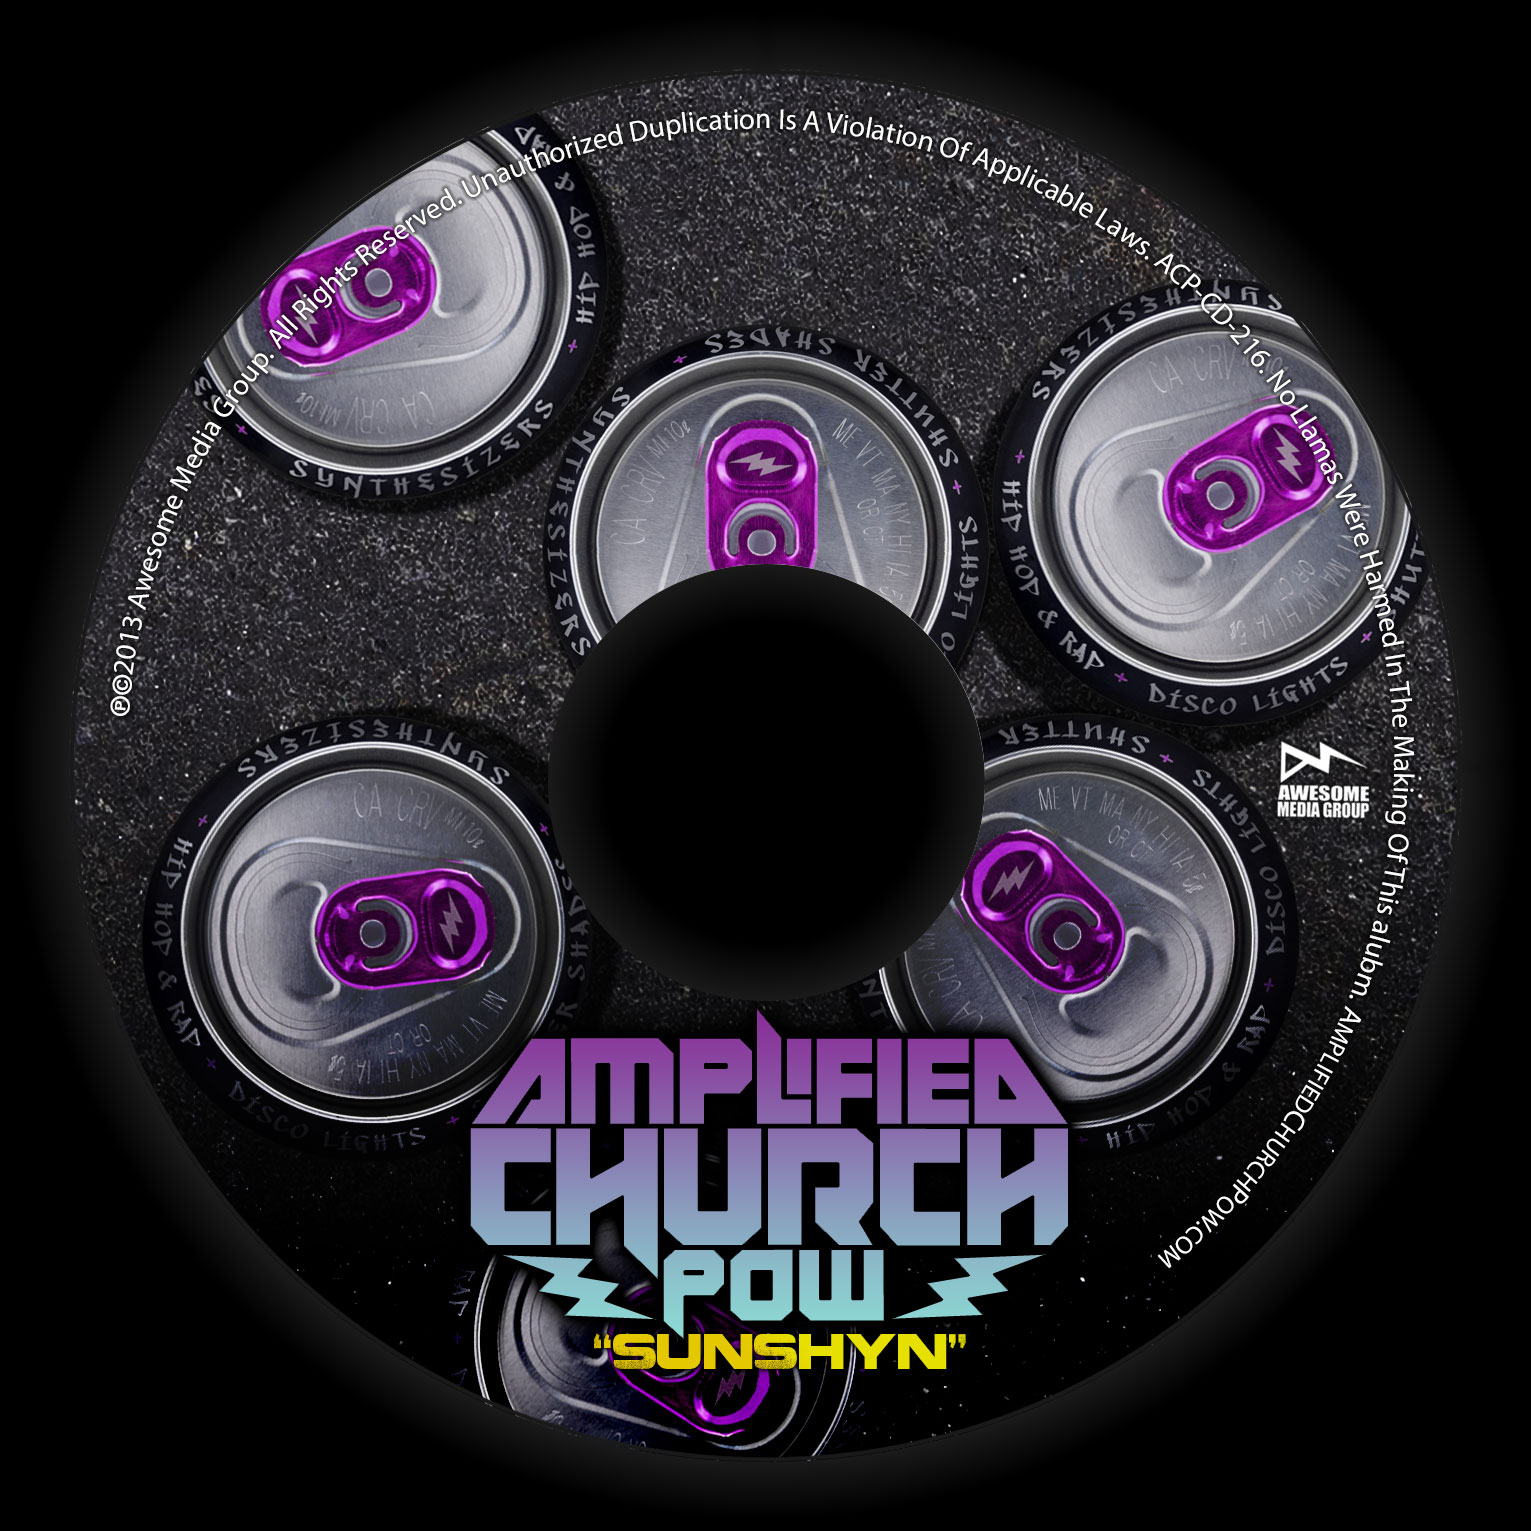 Amplified Church Pow “SunShyn” CD label artwork design